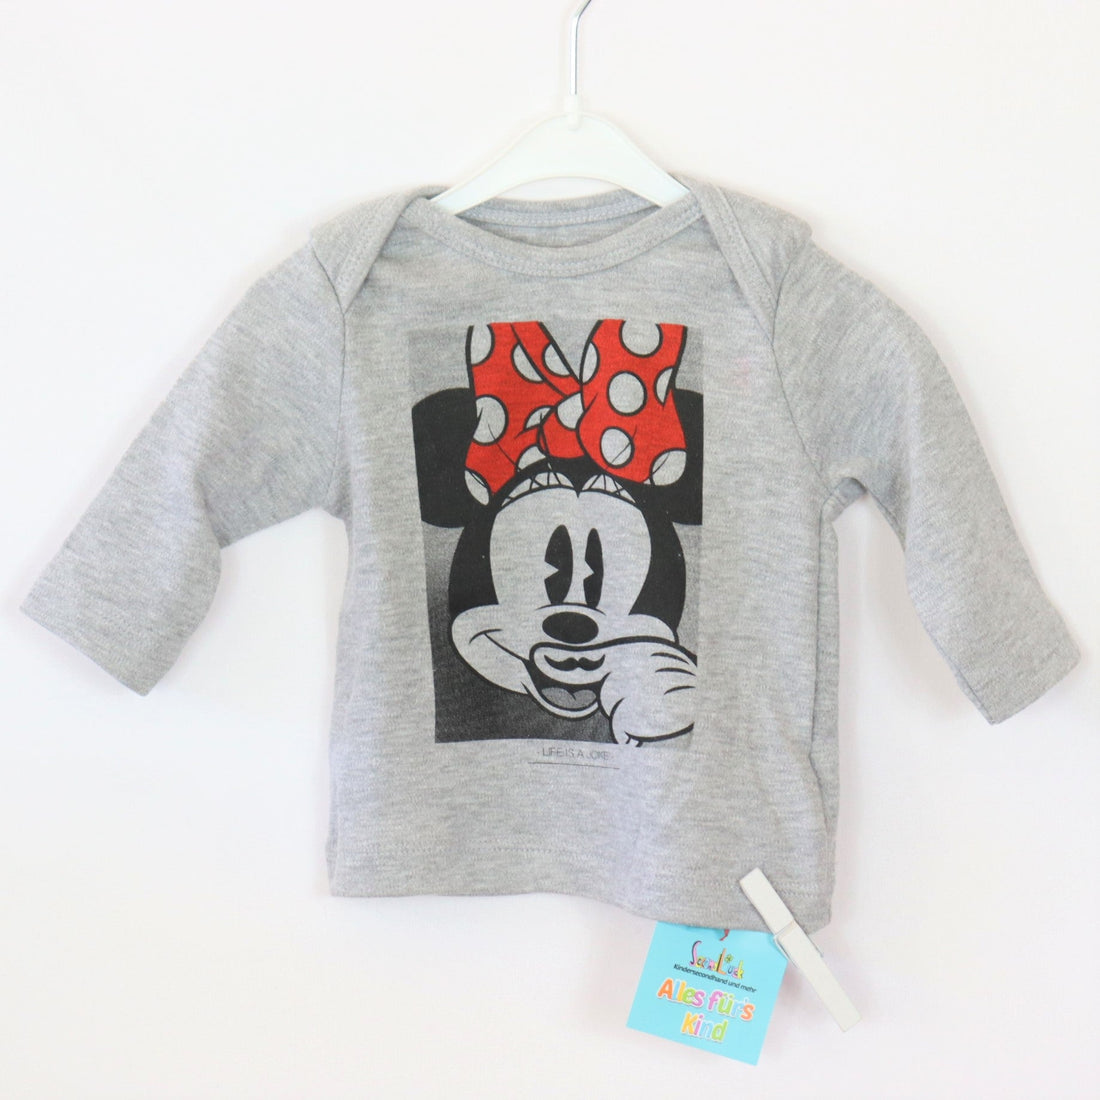 Langarm - Disney - 62 - grau - bedruckt - Minnie Mouse - Boy - sehr guter Zustand